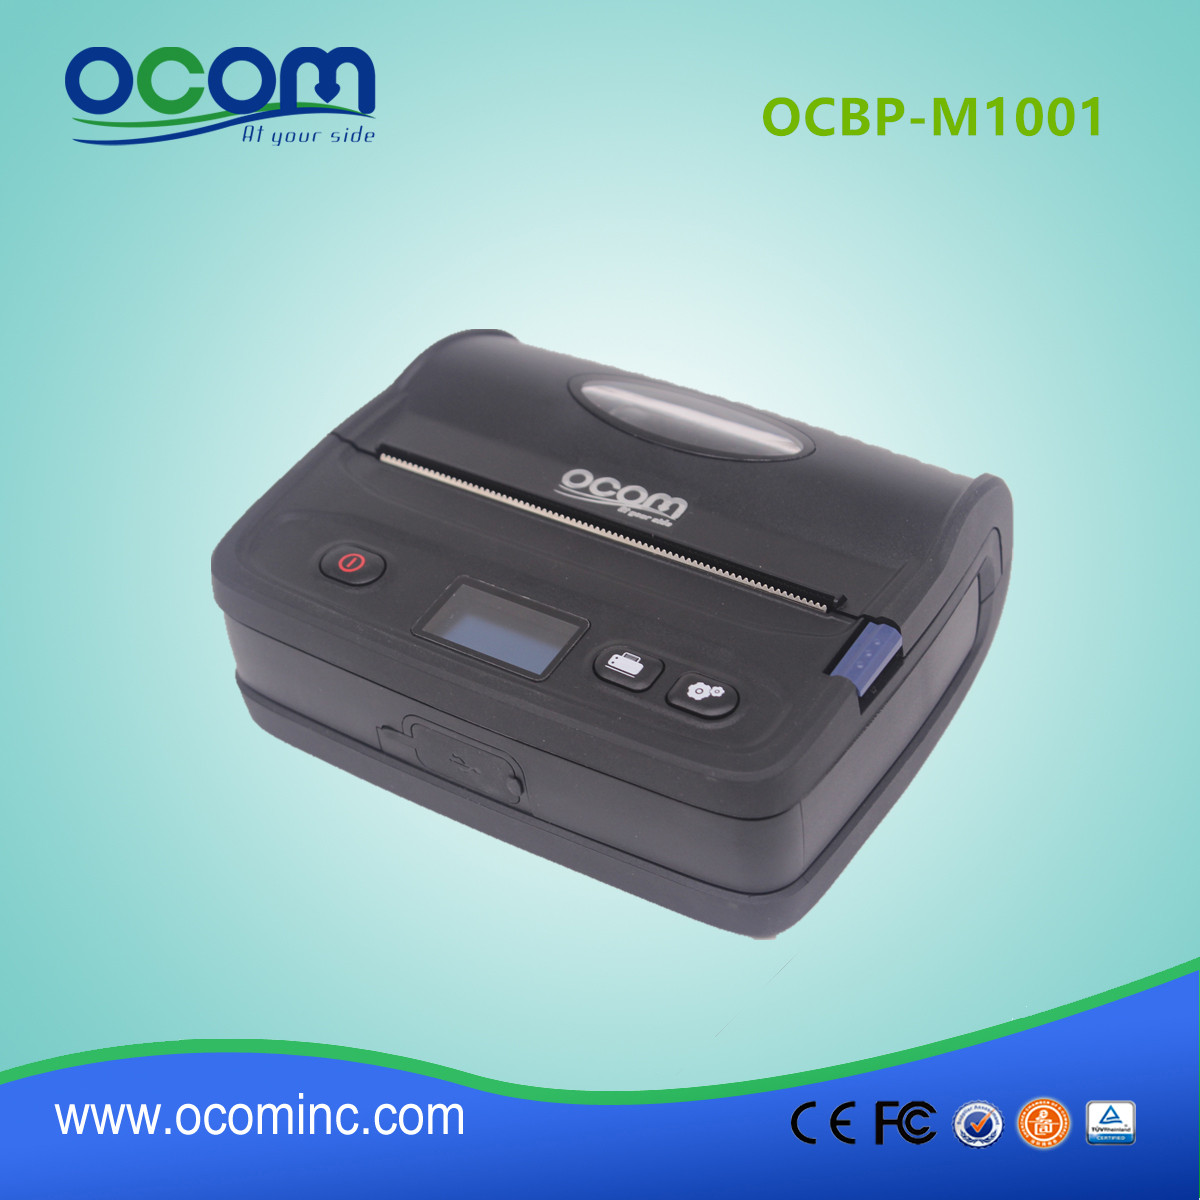 OCBP-M1001 Thermal Adhesive Barcode Label Printer for Stickers